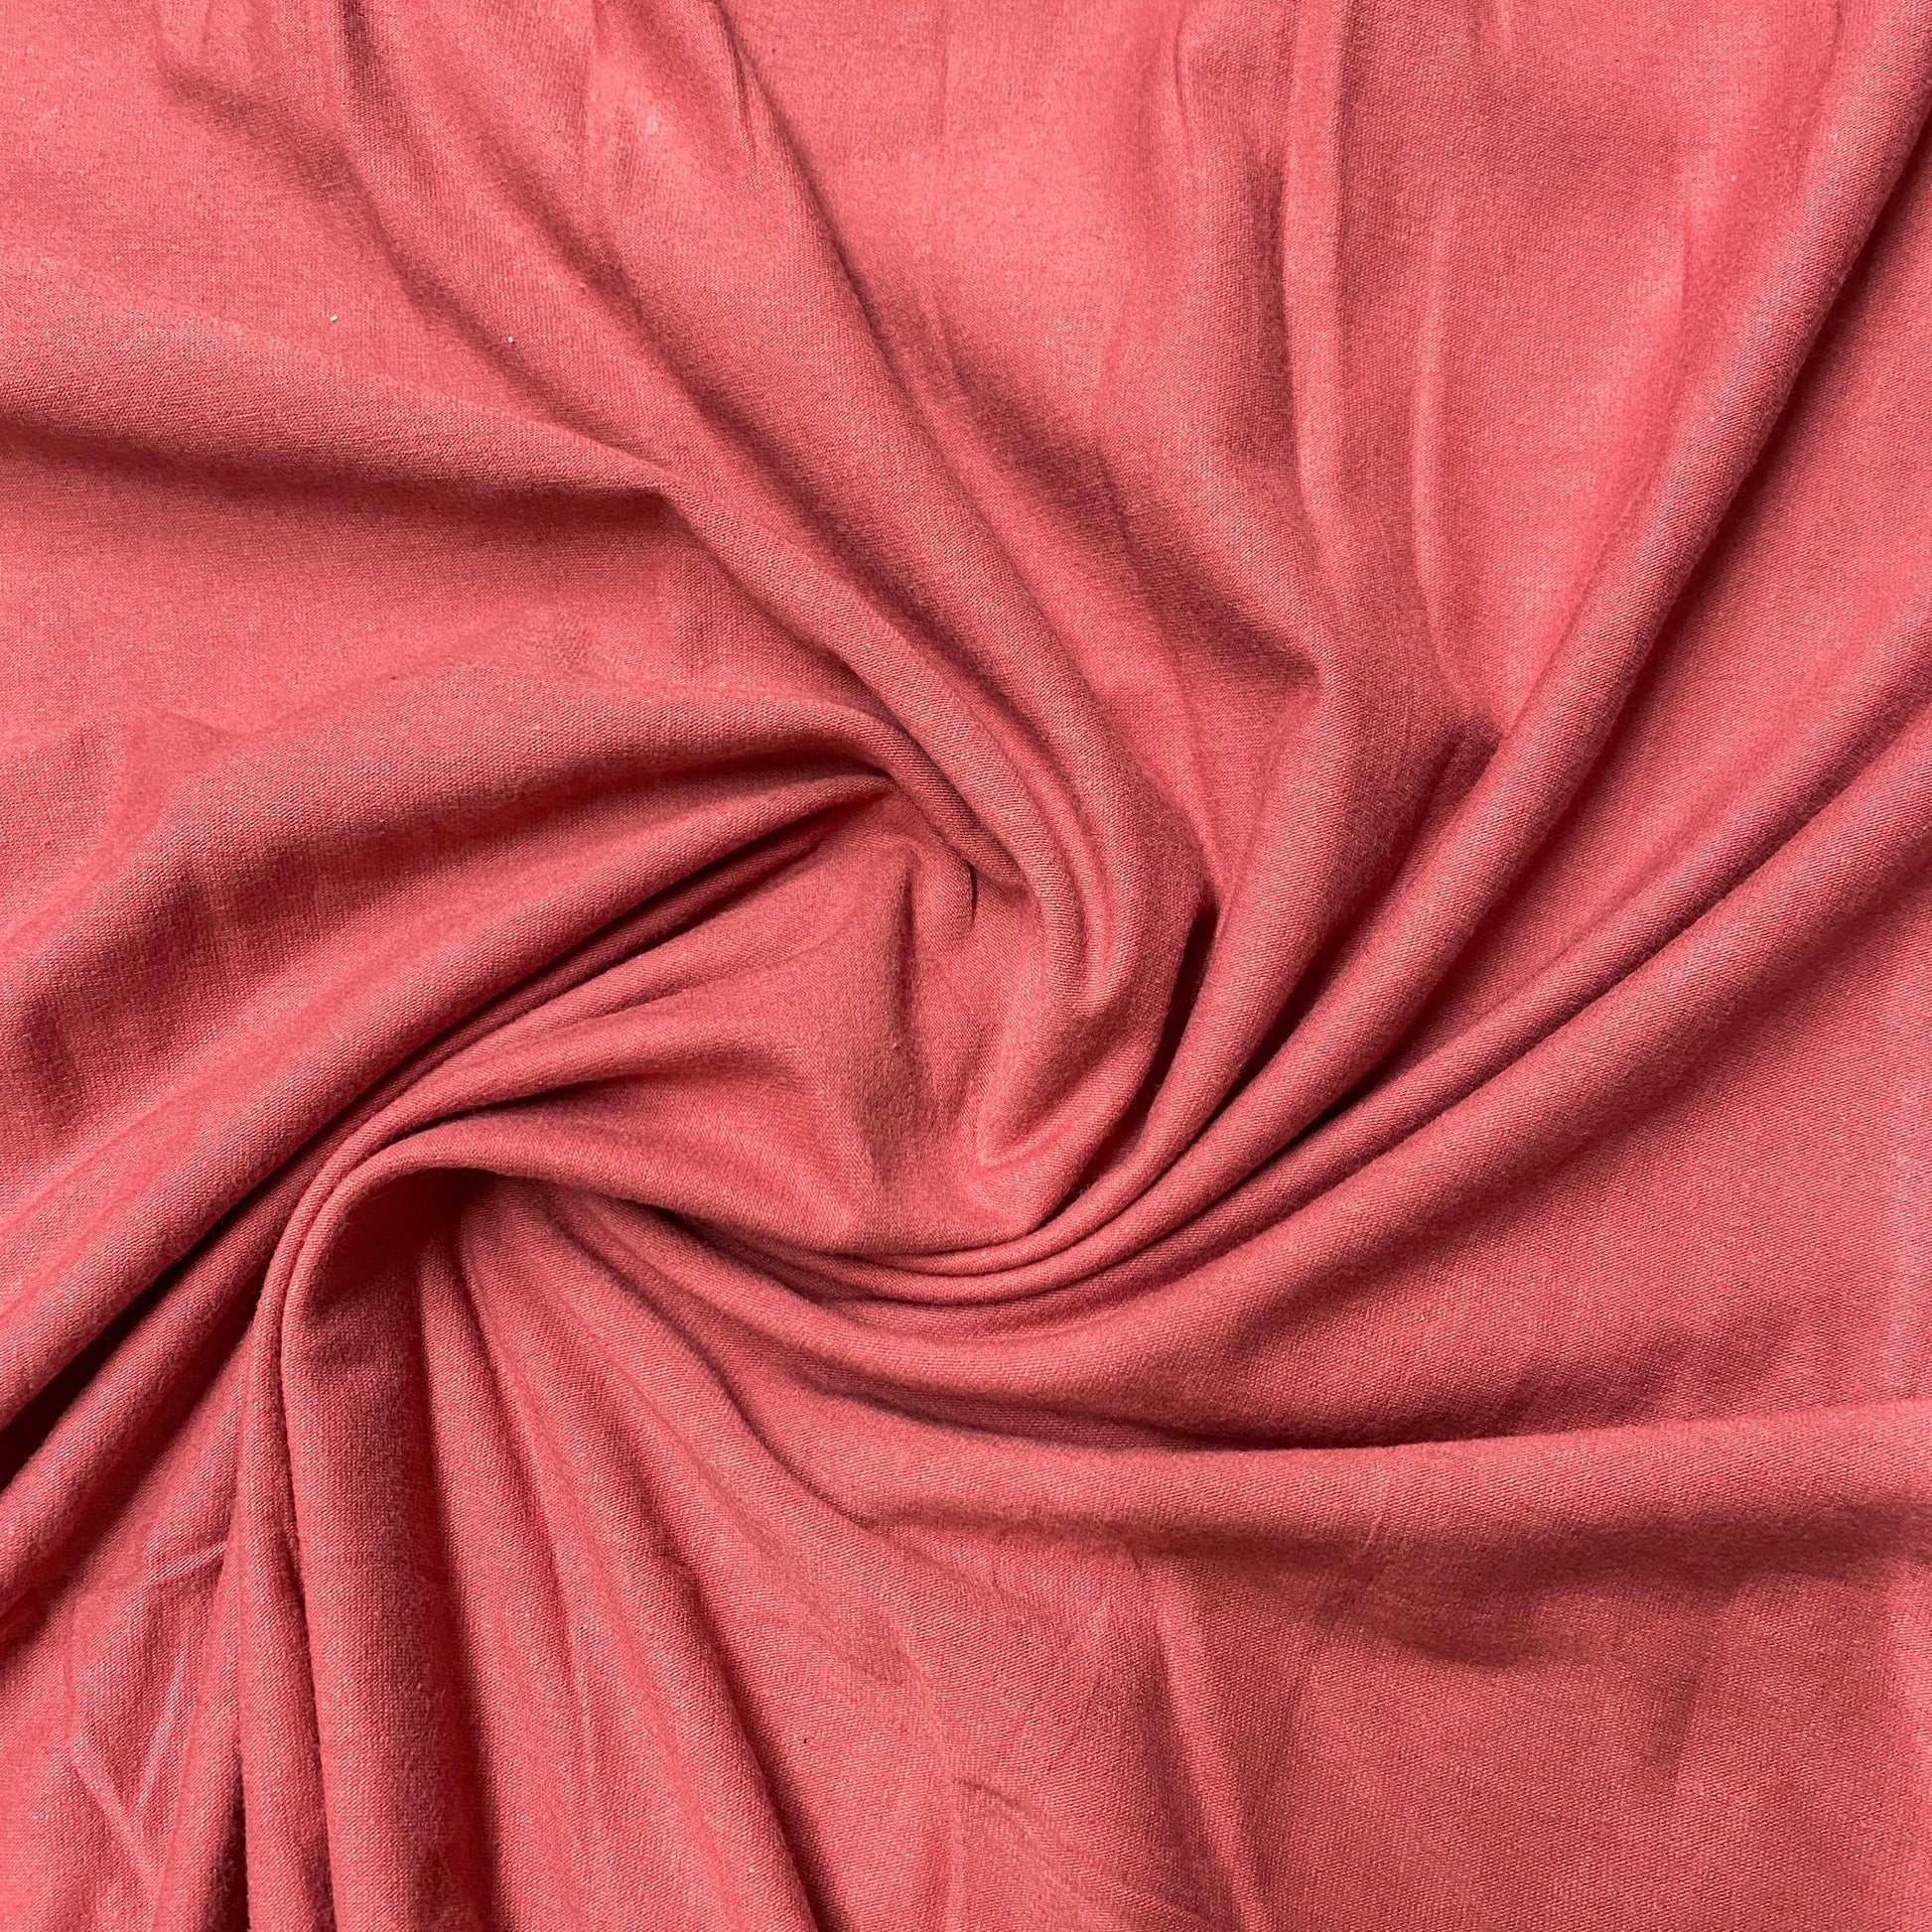 Dusty Rose Cotton/Spandex Jersey Fabric - 200 GSM - Nature's Fabrics